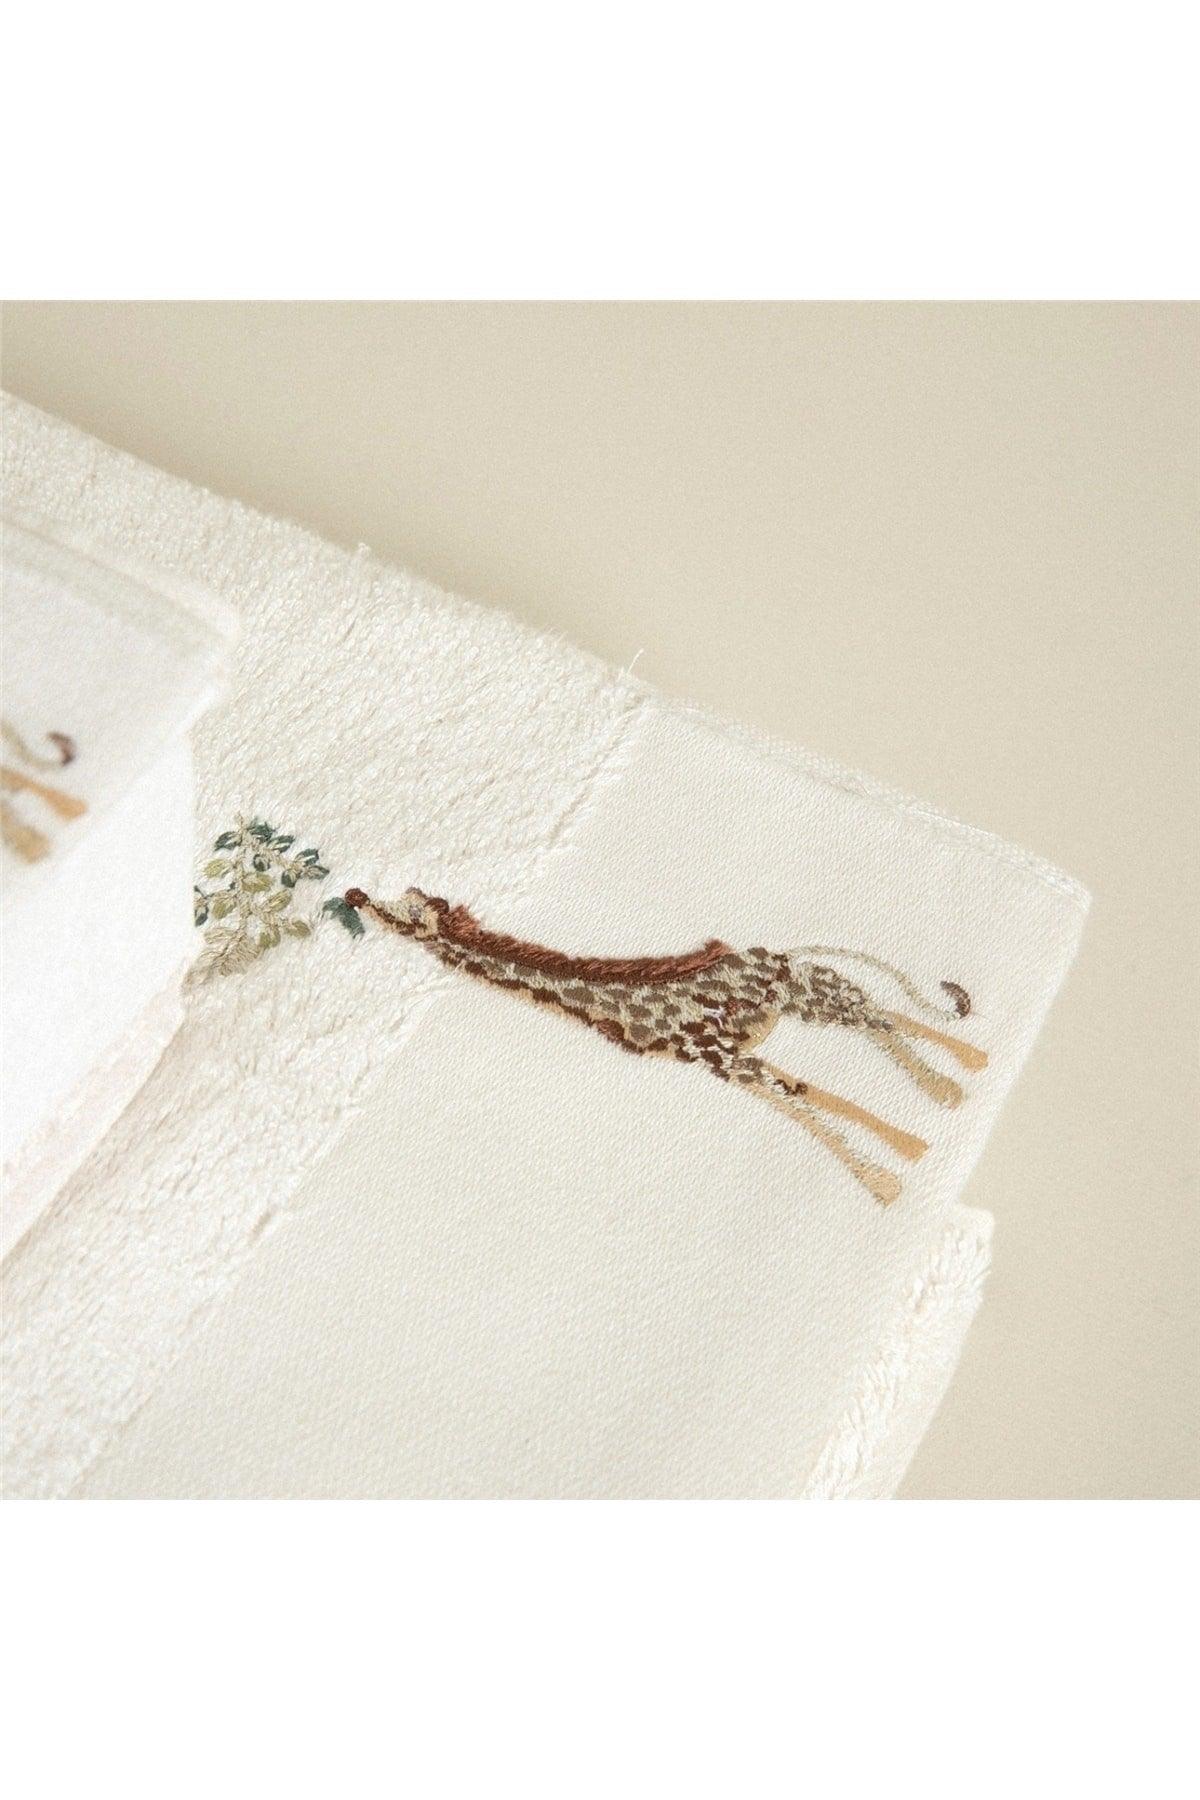 Giraffee Face Towel 50x90 cm Ecru - Swordslife